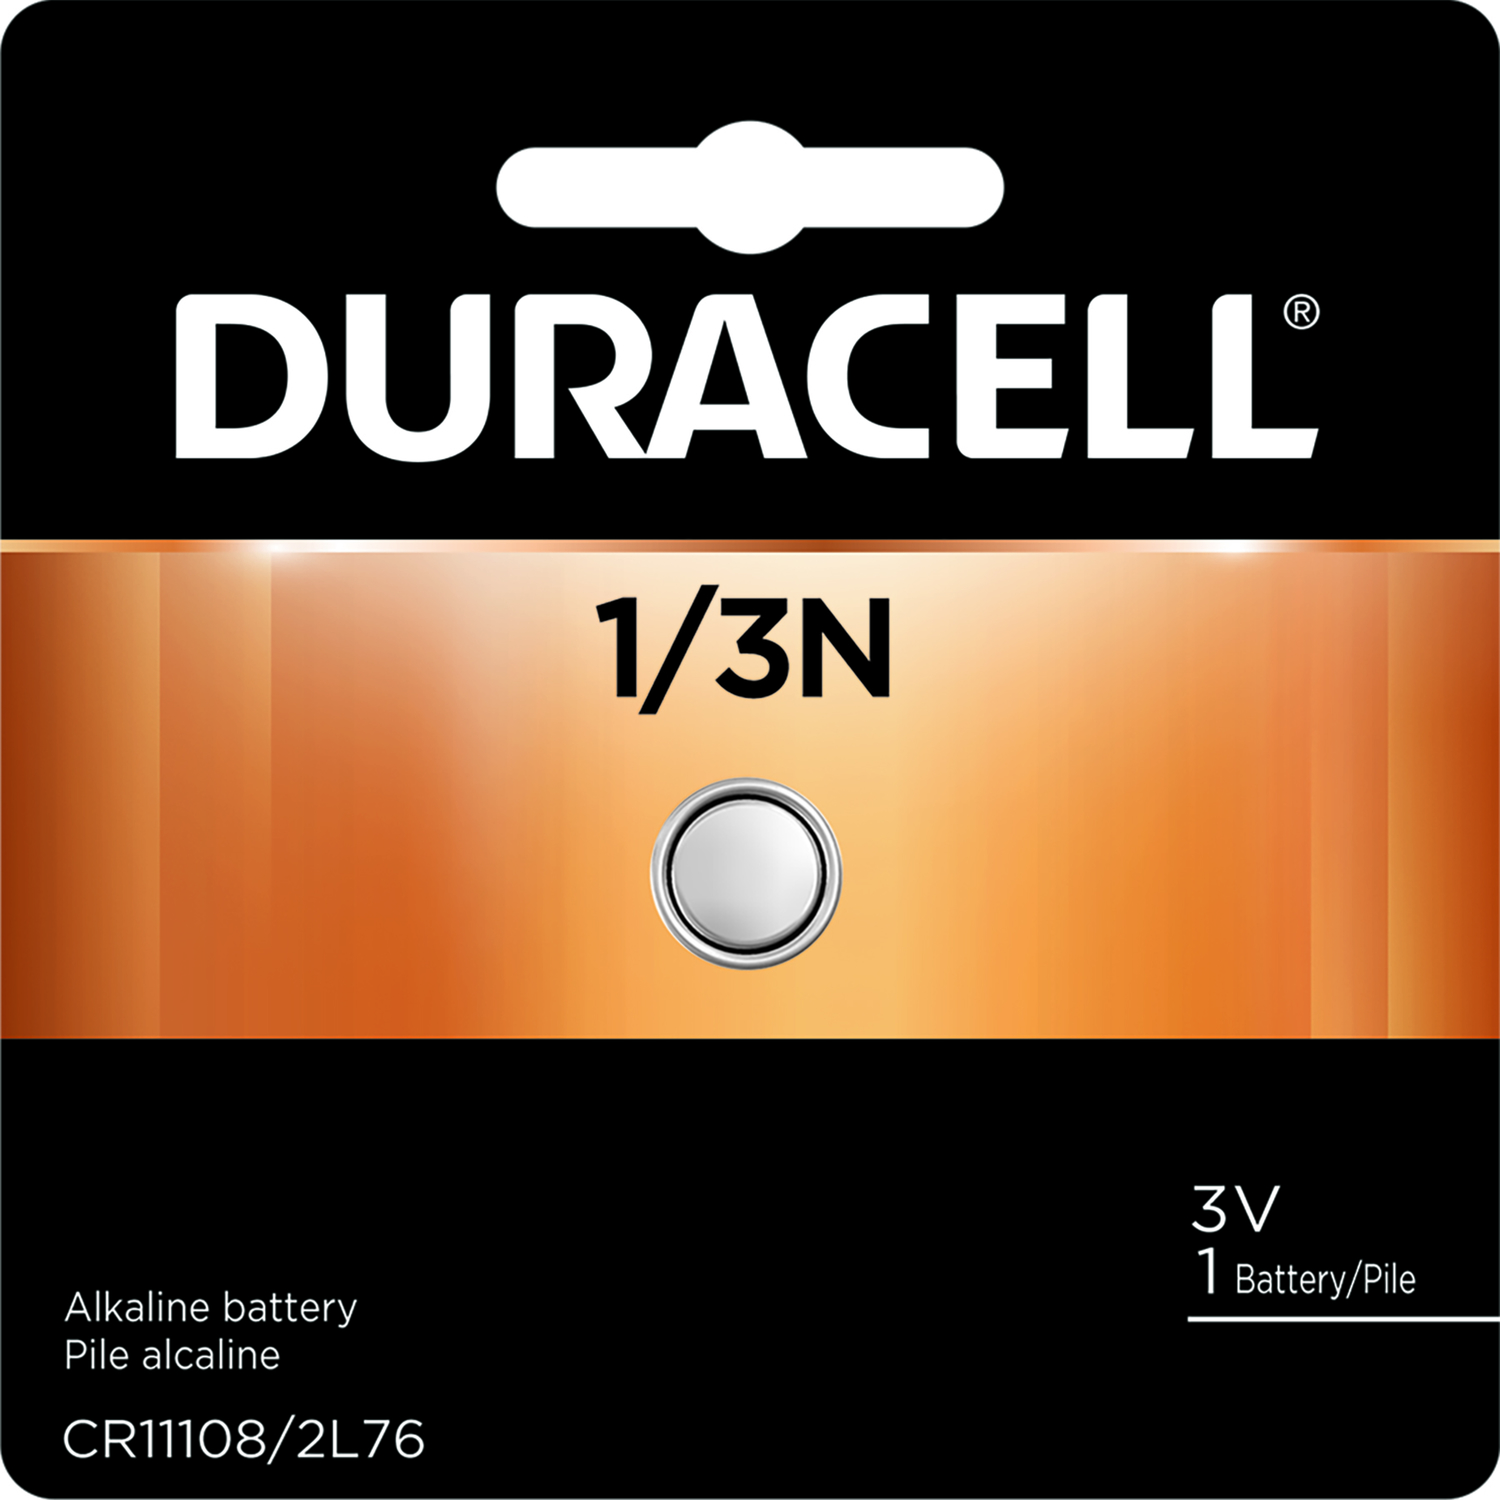 Duracell Lithium 1/3N 3 V 160 Ah Camera Battery 1 pk